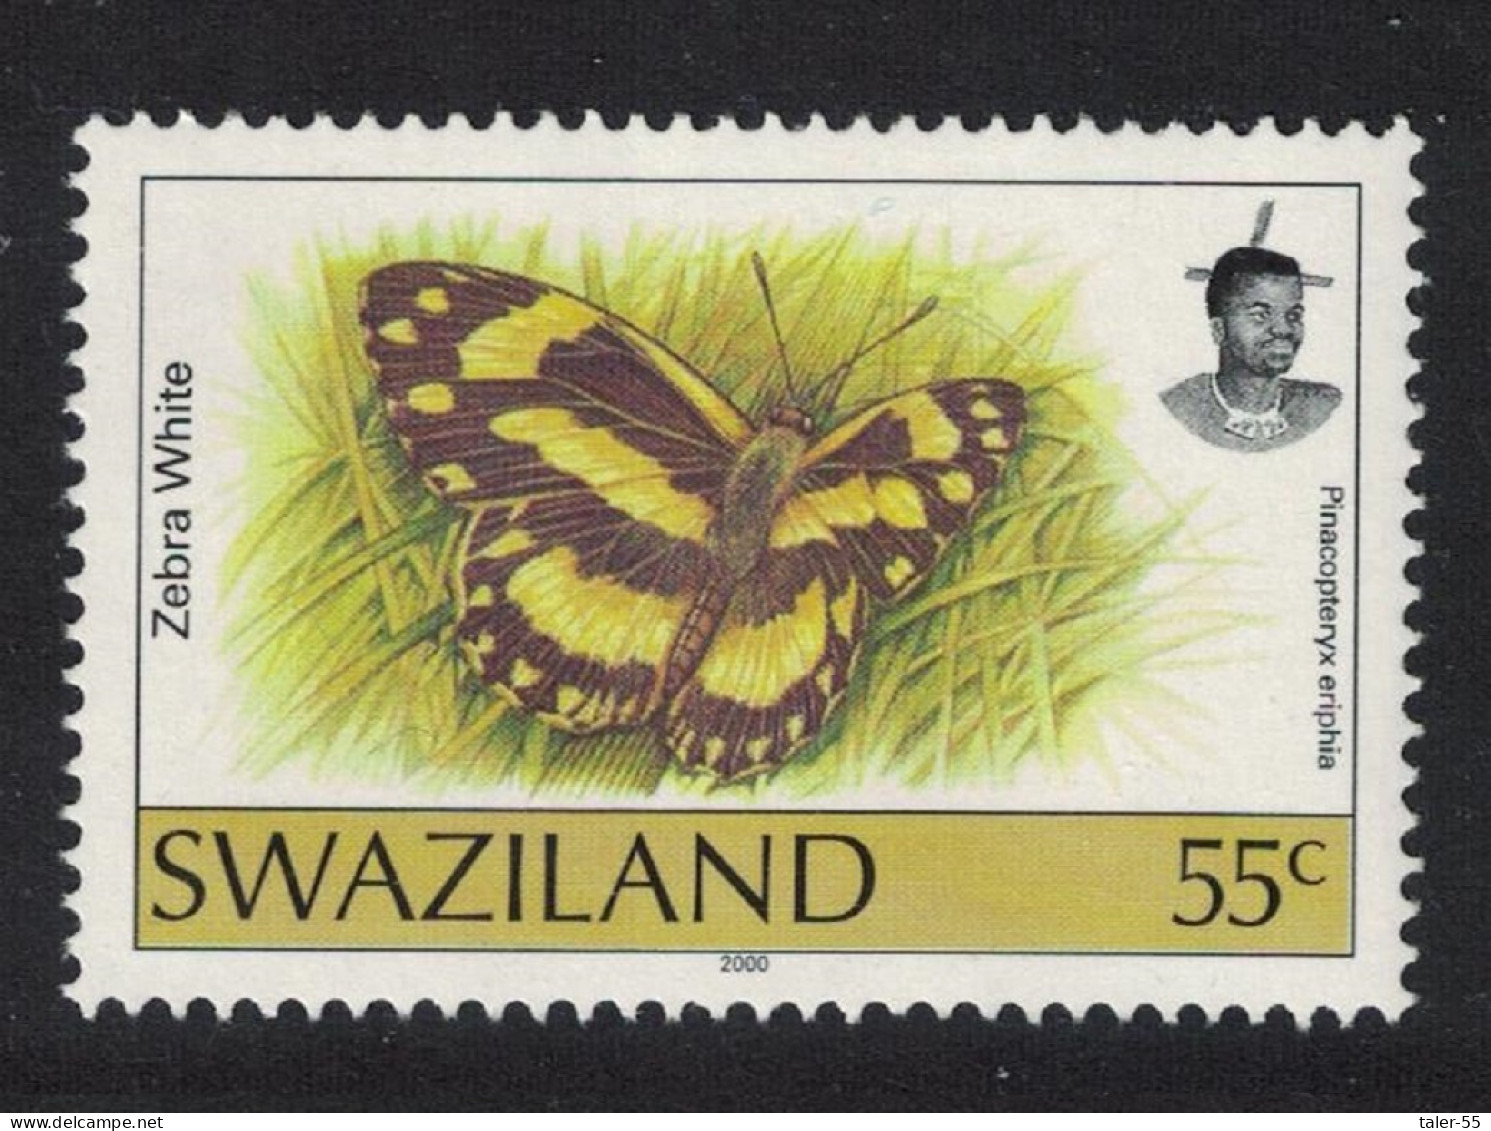 Swaziland Butterfly 'Pinacopteryx Eriphia' 55c Imprint '2000' RARR Def SG#615a - Swaziland (1968-...)